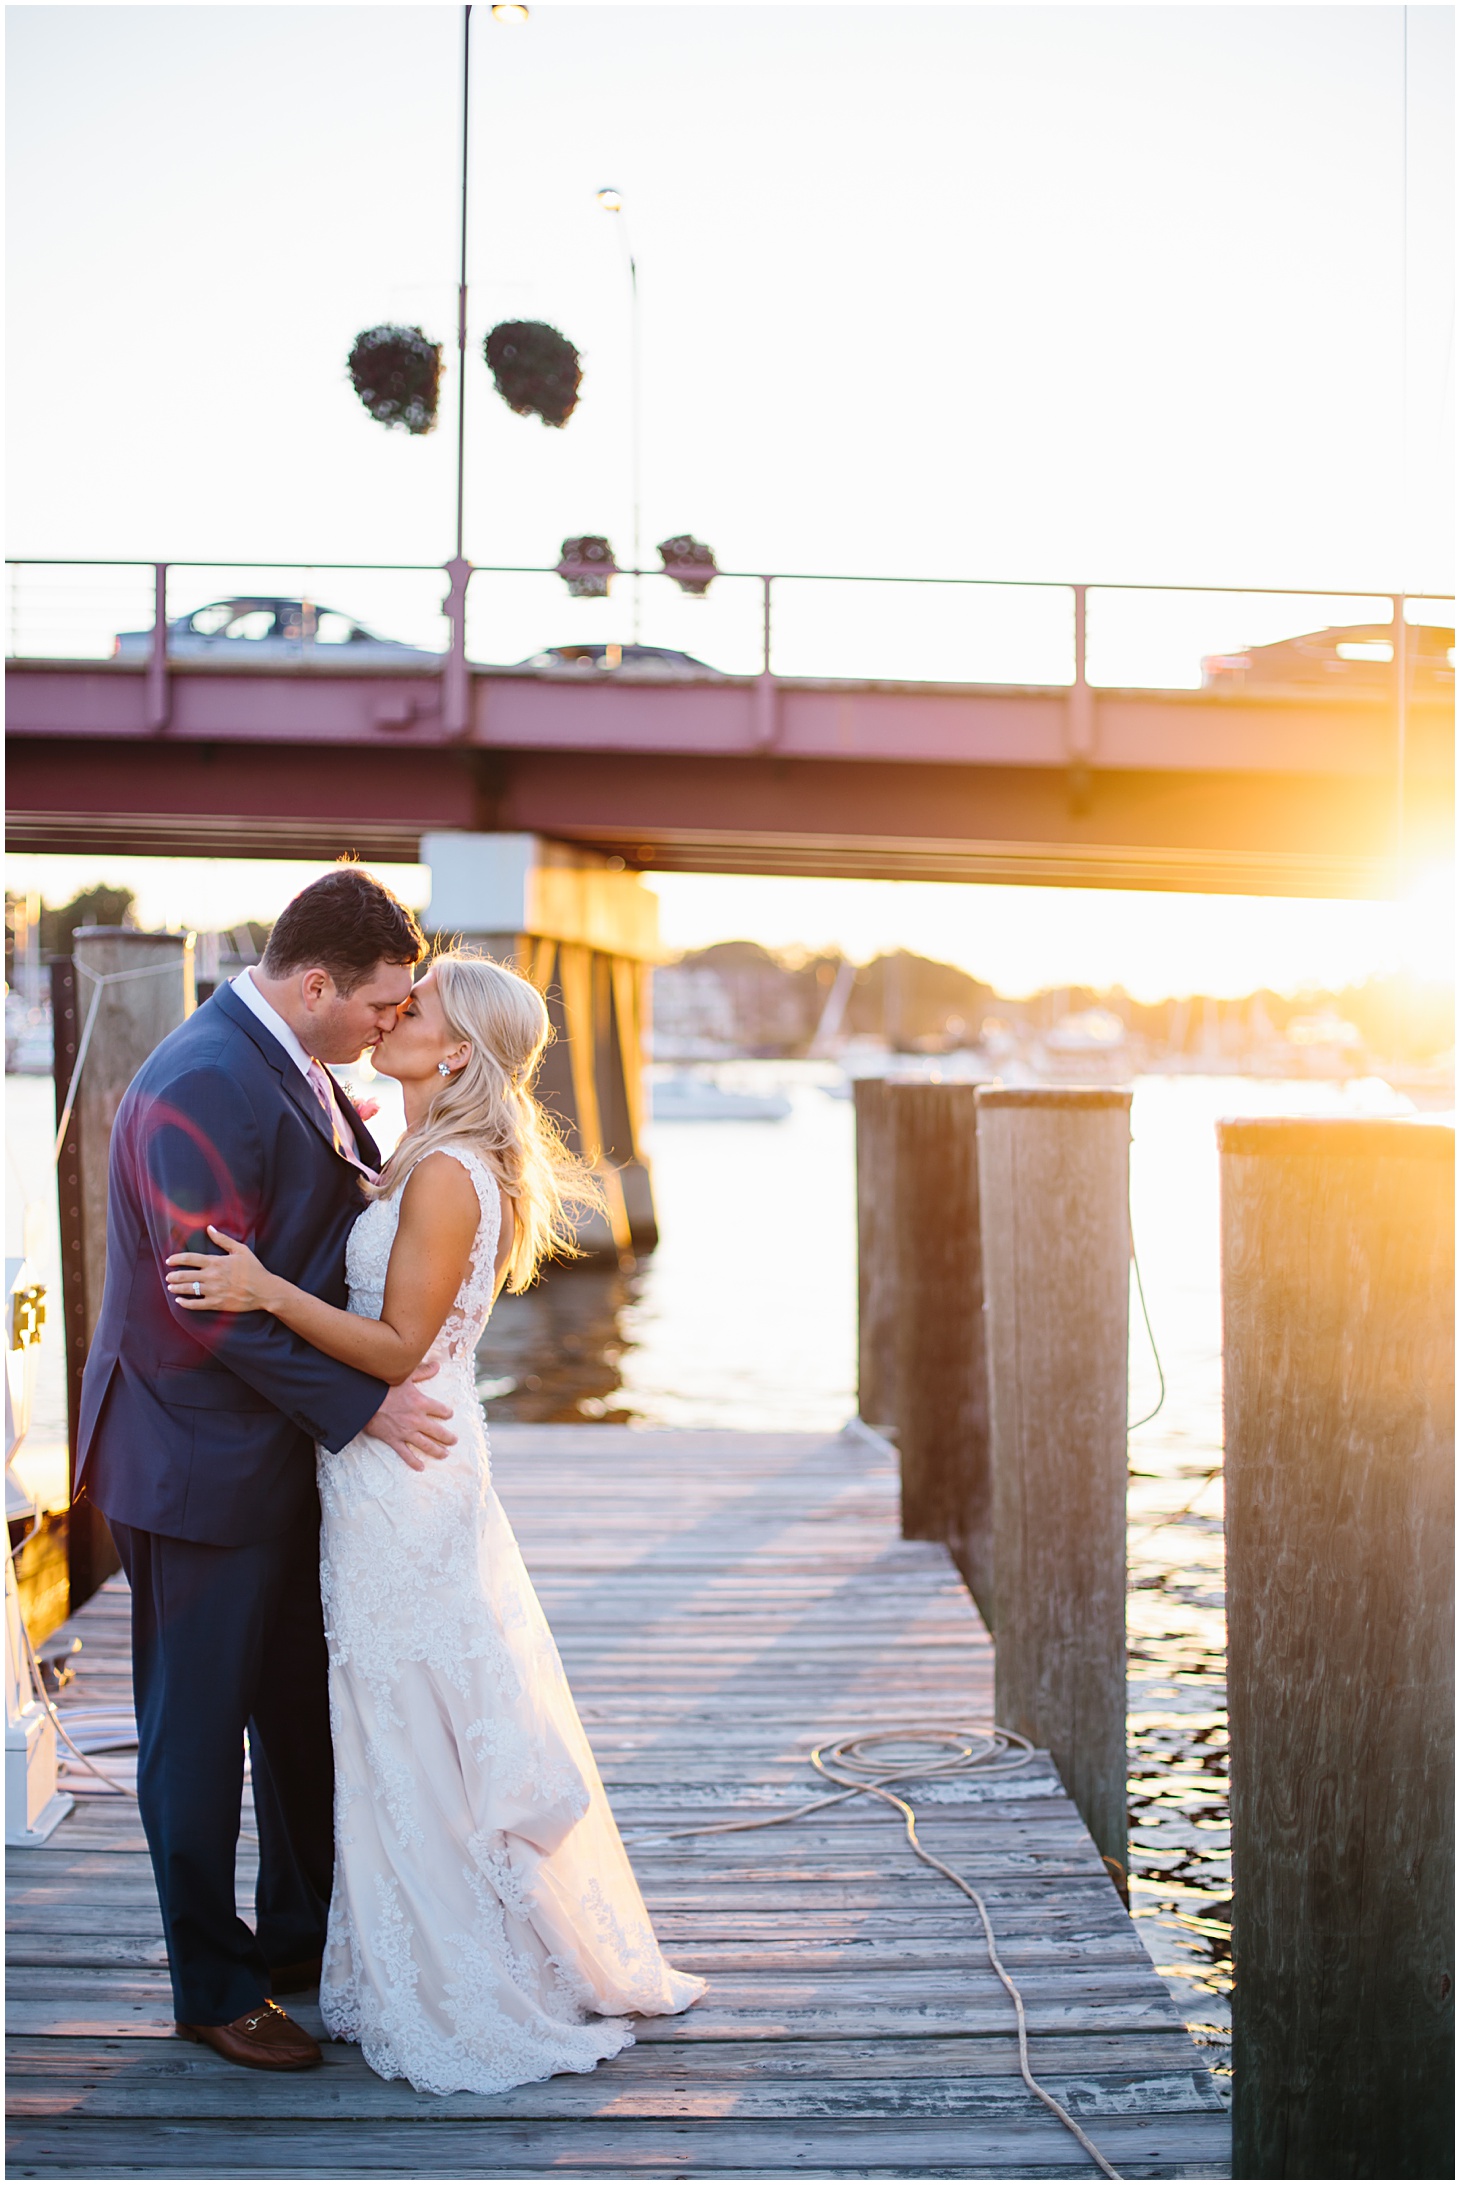 Navy & Blush Nautical Wedding at Annapolis Yacht Club by Sarah Bradshaw Photography_0043